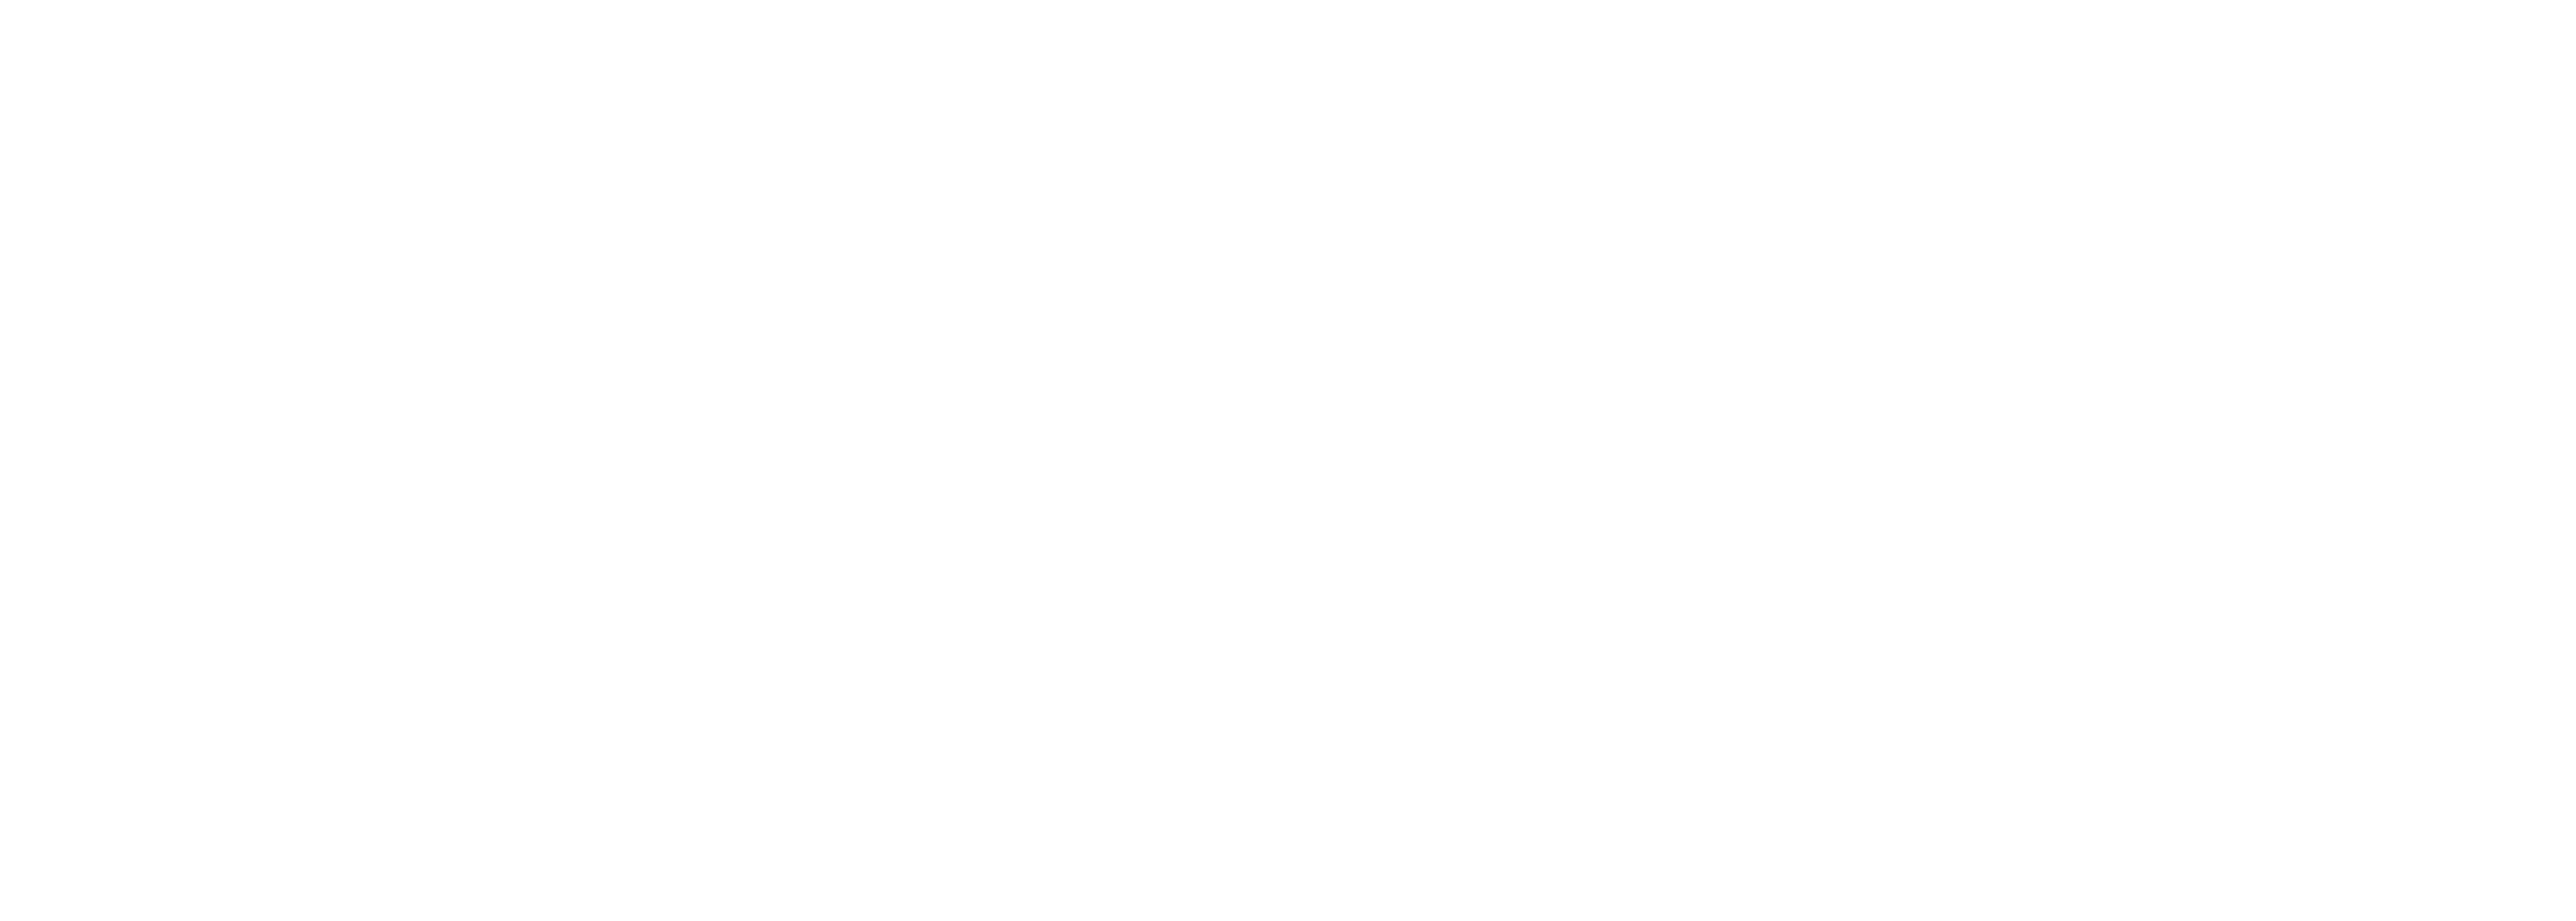 001-merken/eastborn/001-logos/eastborn-logo.png